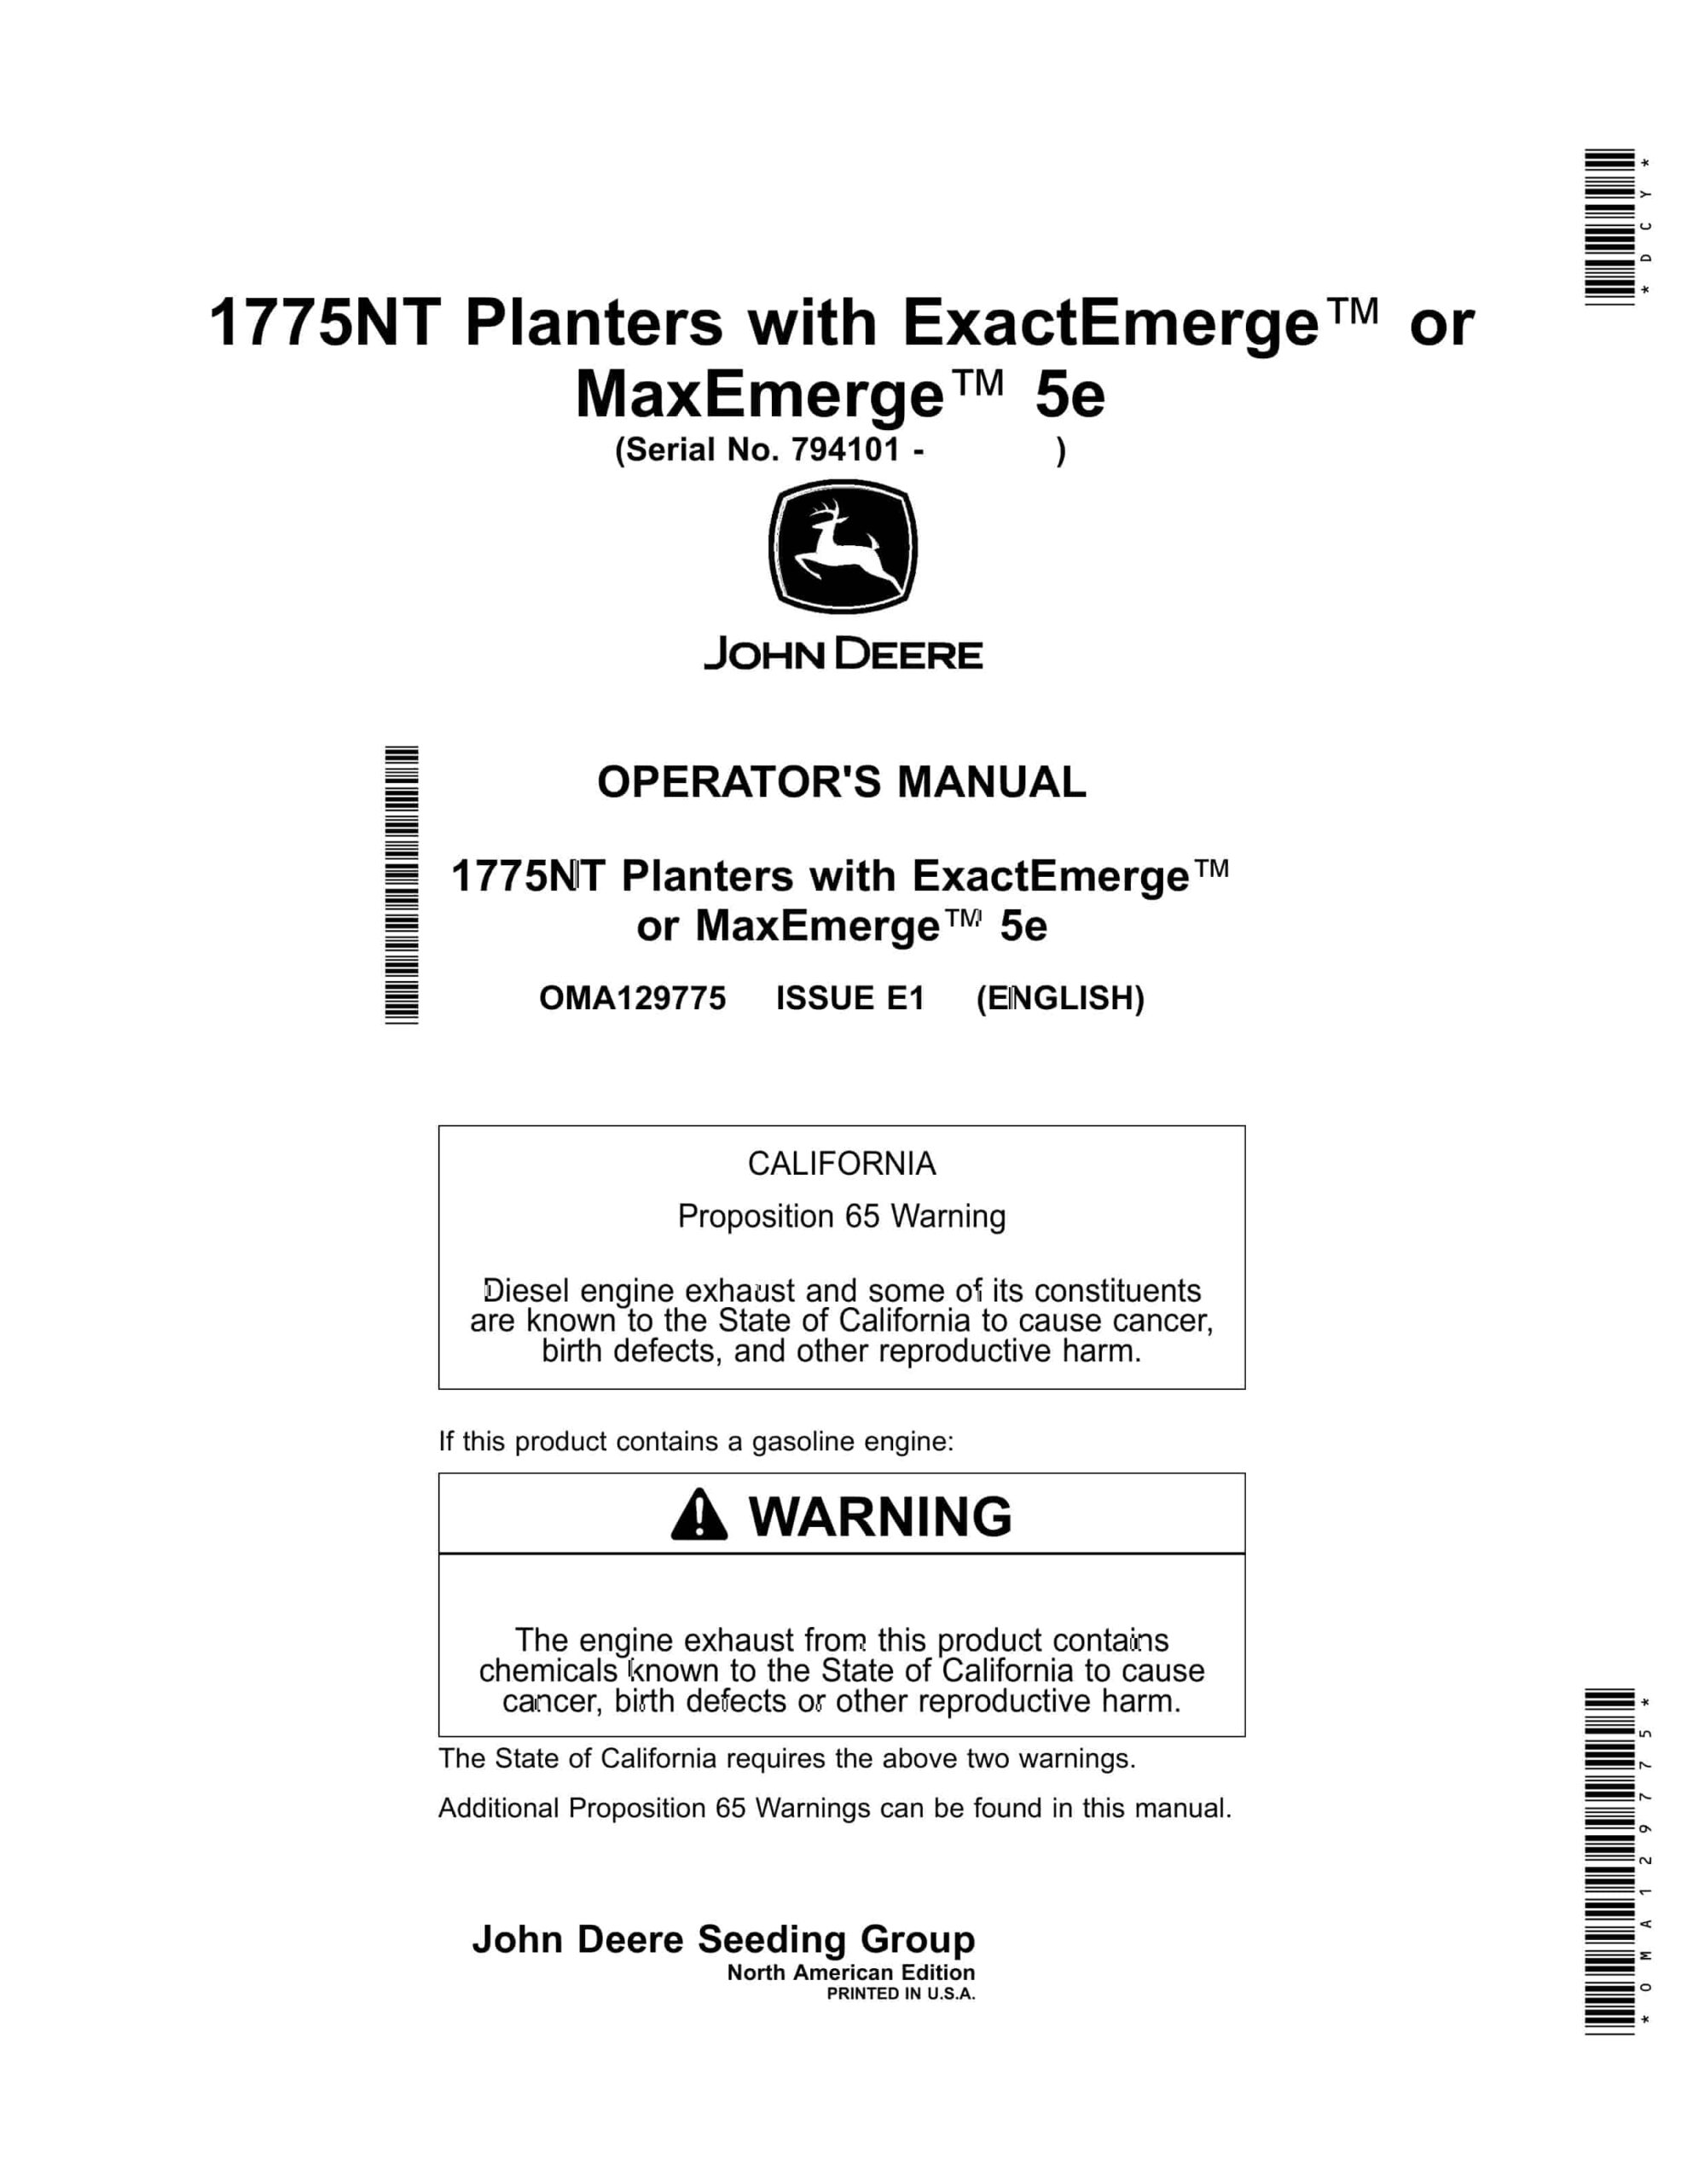 John Deere 1775NT Planters with ExactEmerge or MaxEmerge 5e Operator Manual OMA129775-1